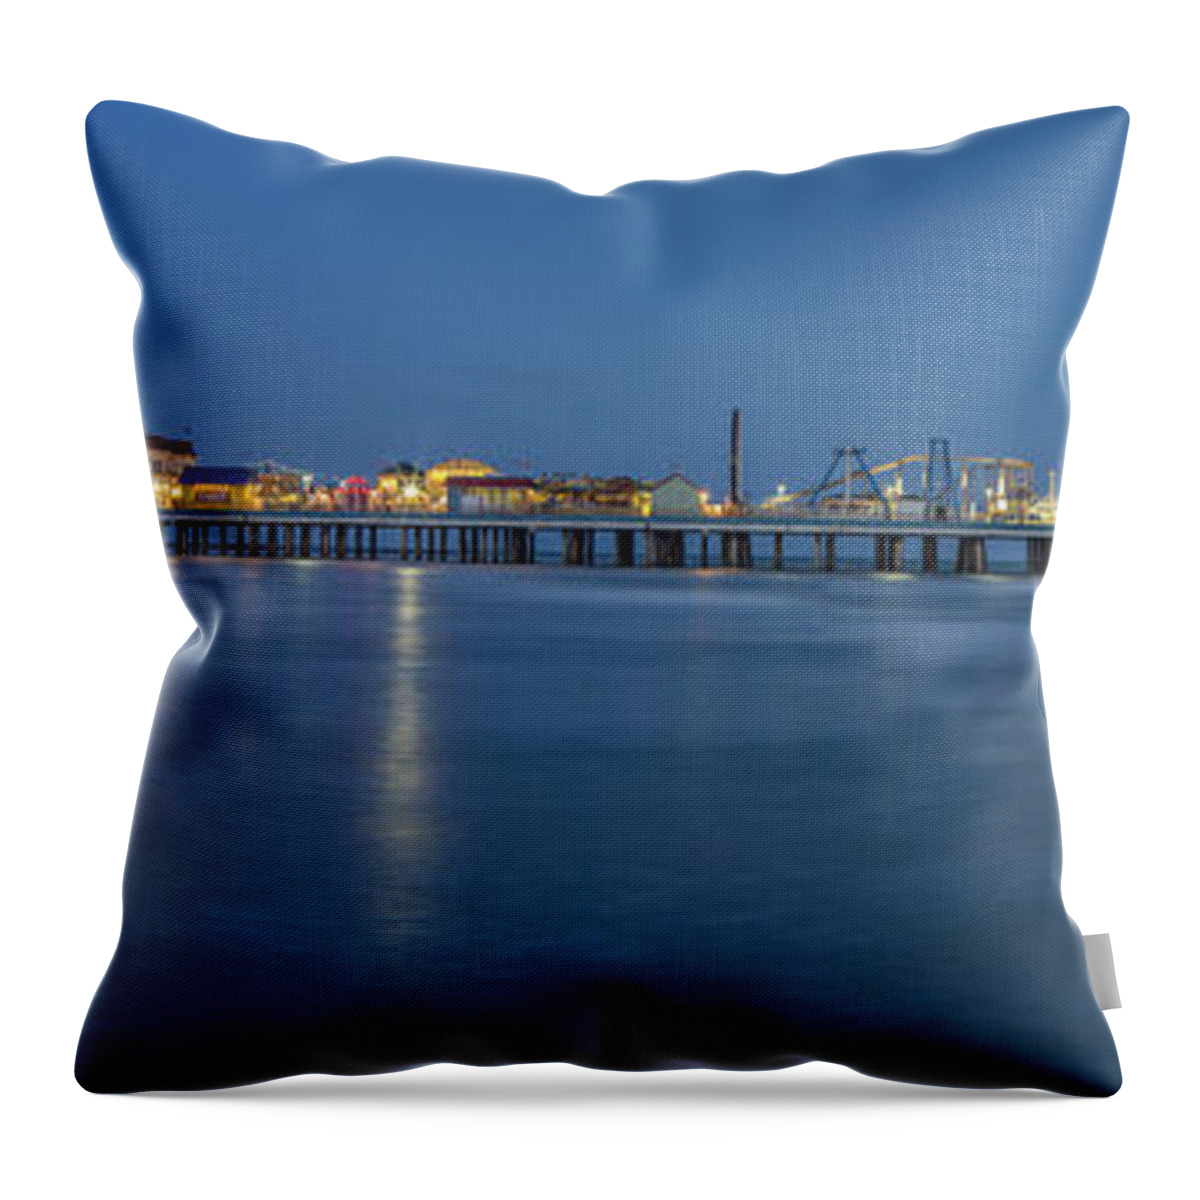 Galveston Throw Pillow featuring the photograph Galveston Pier  by John McGraw